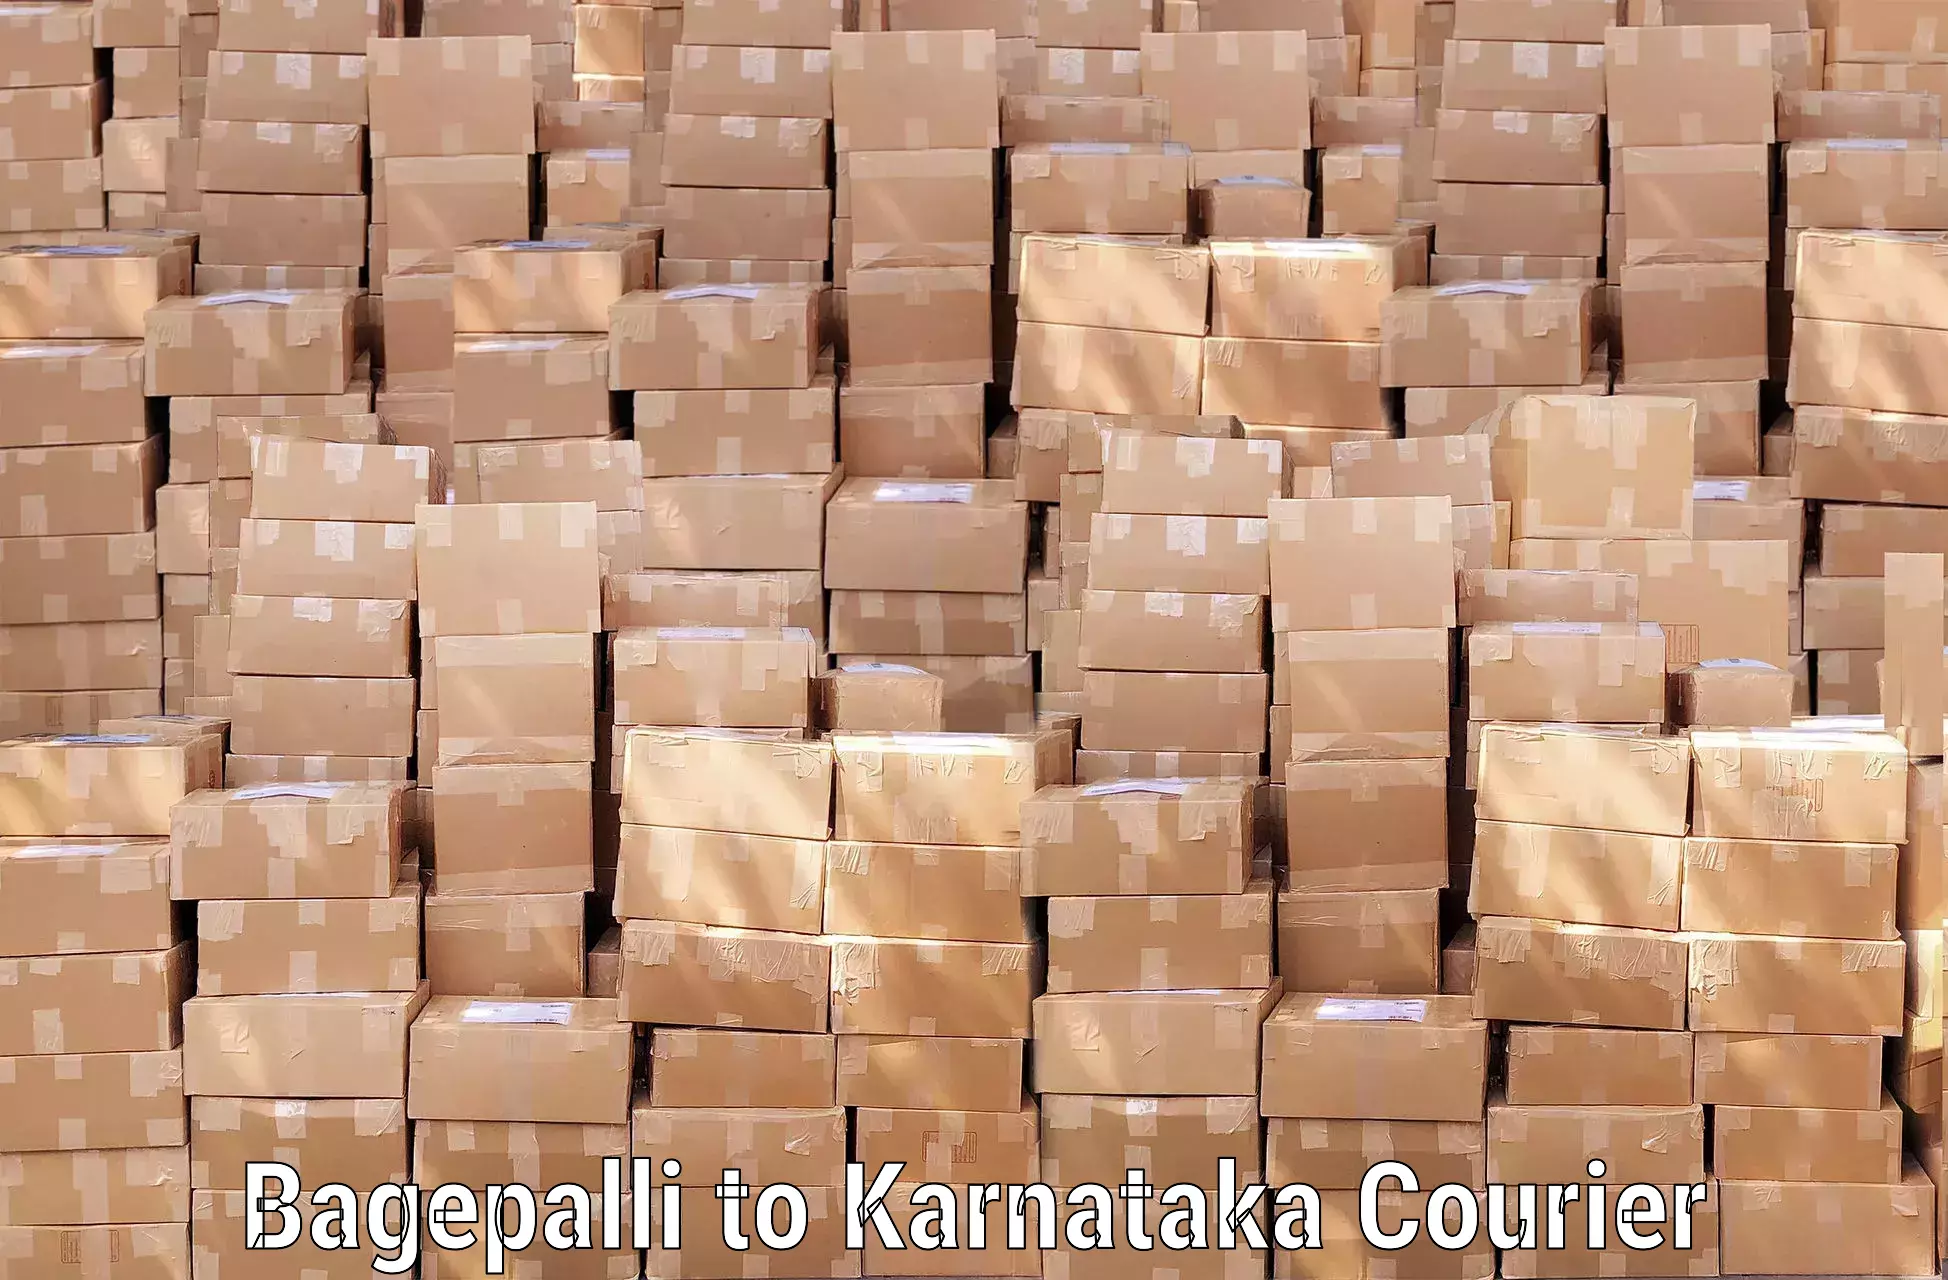 Same day luggage service Bagepalli to Karnataka